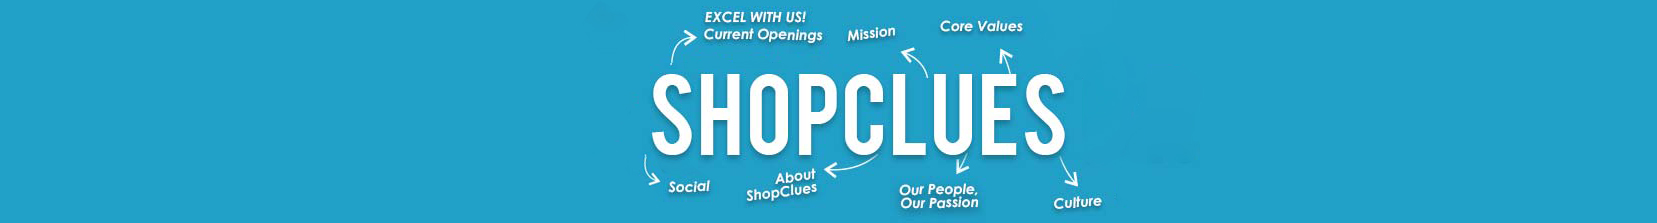 About Us-Shopclues